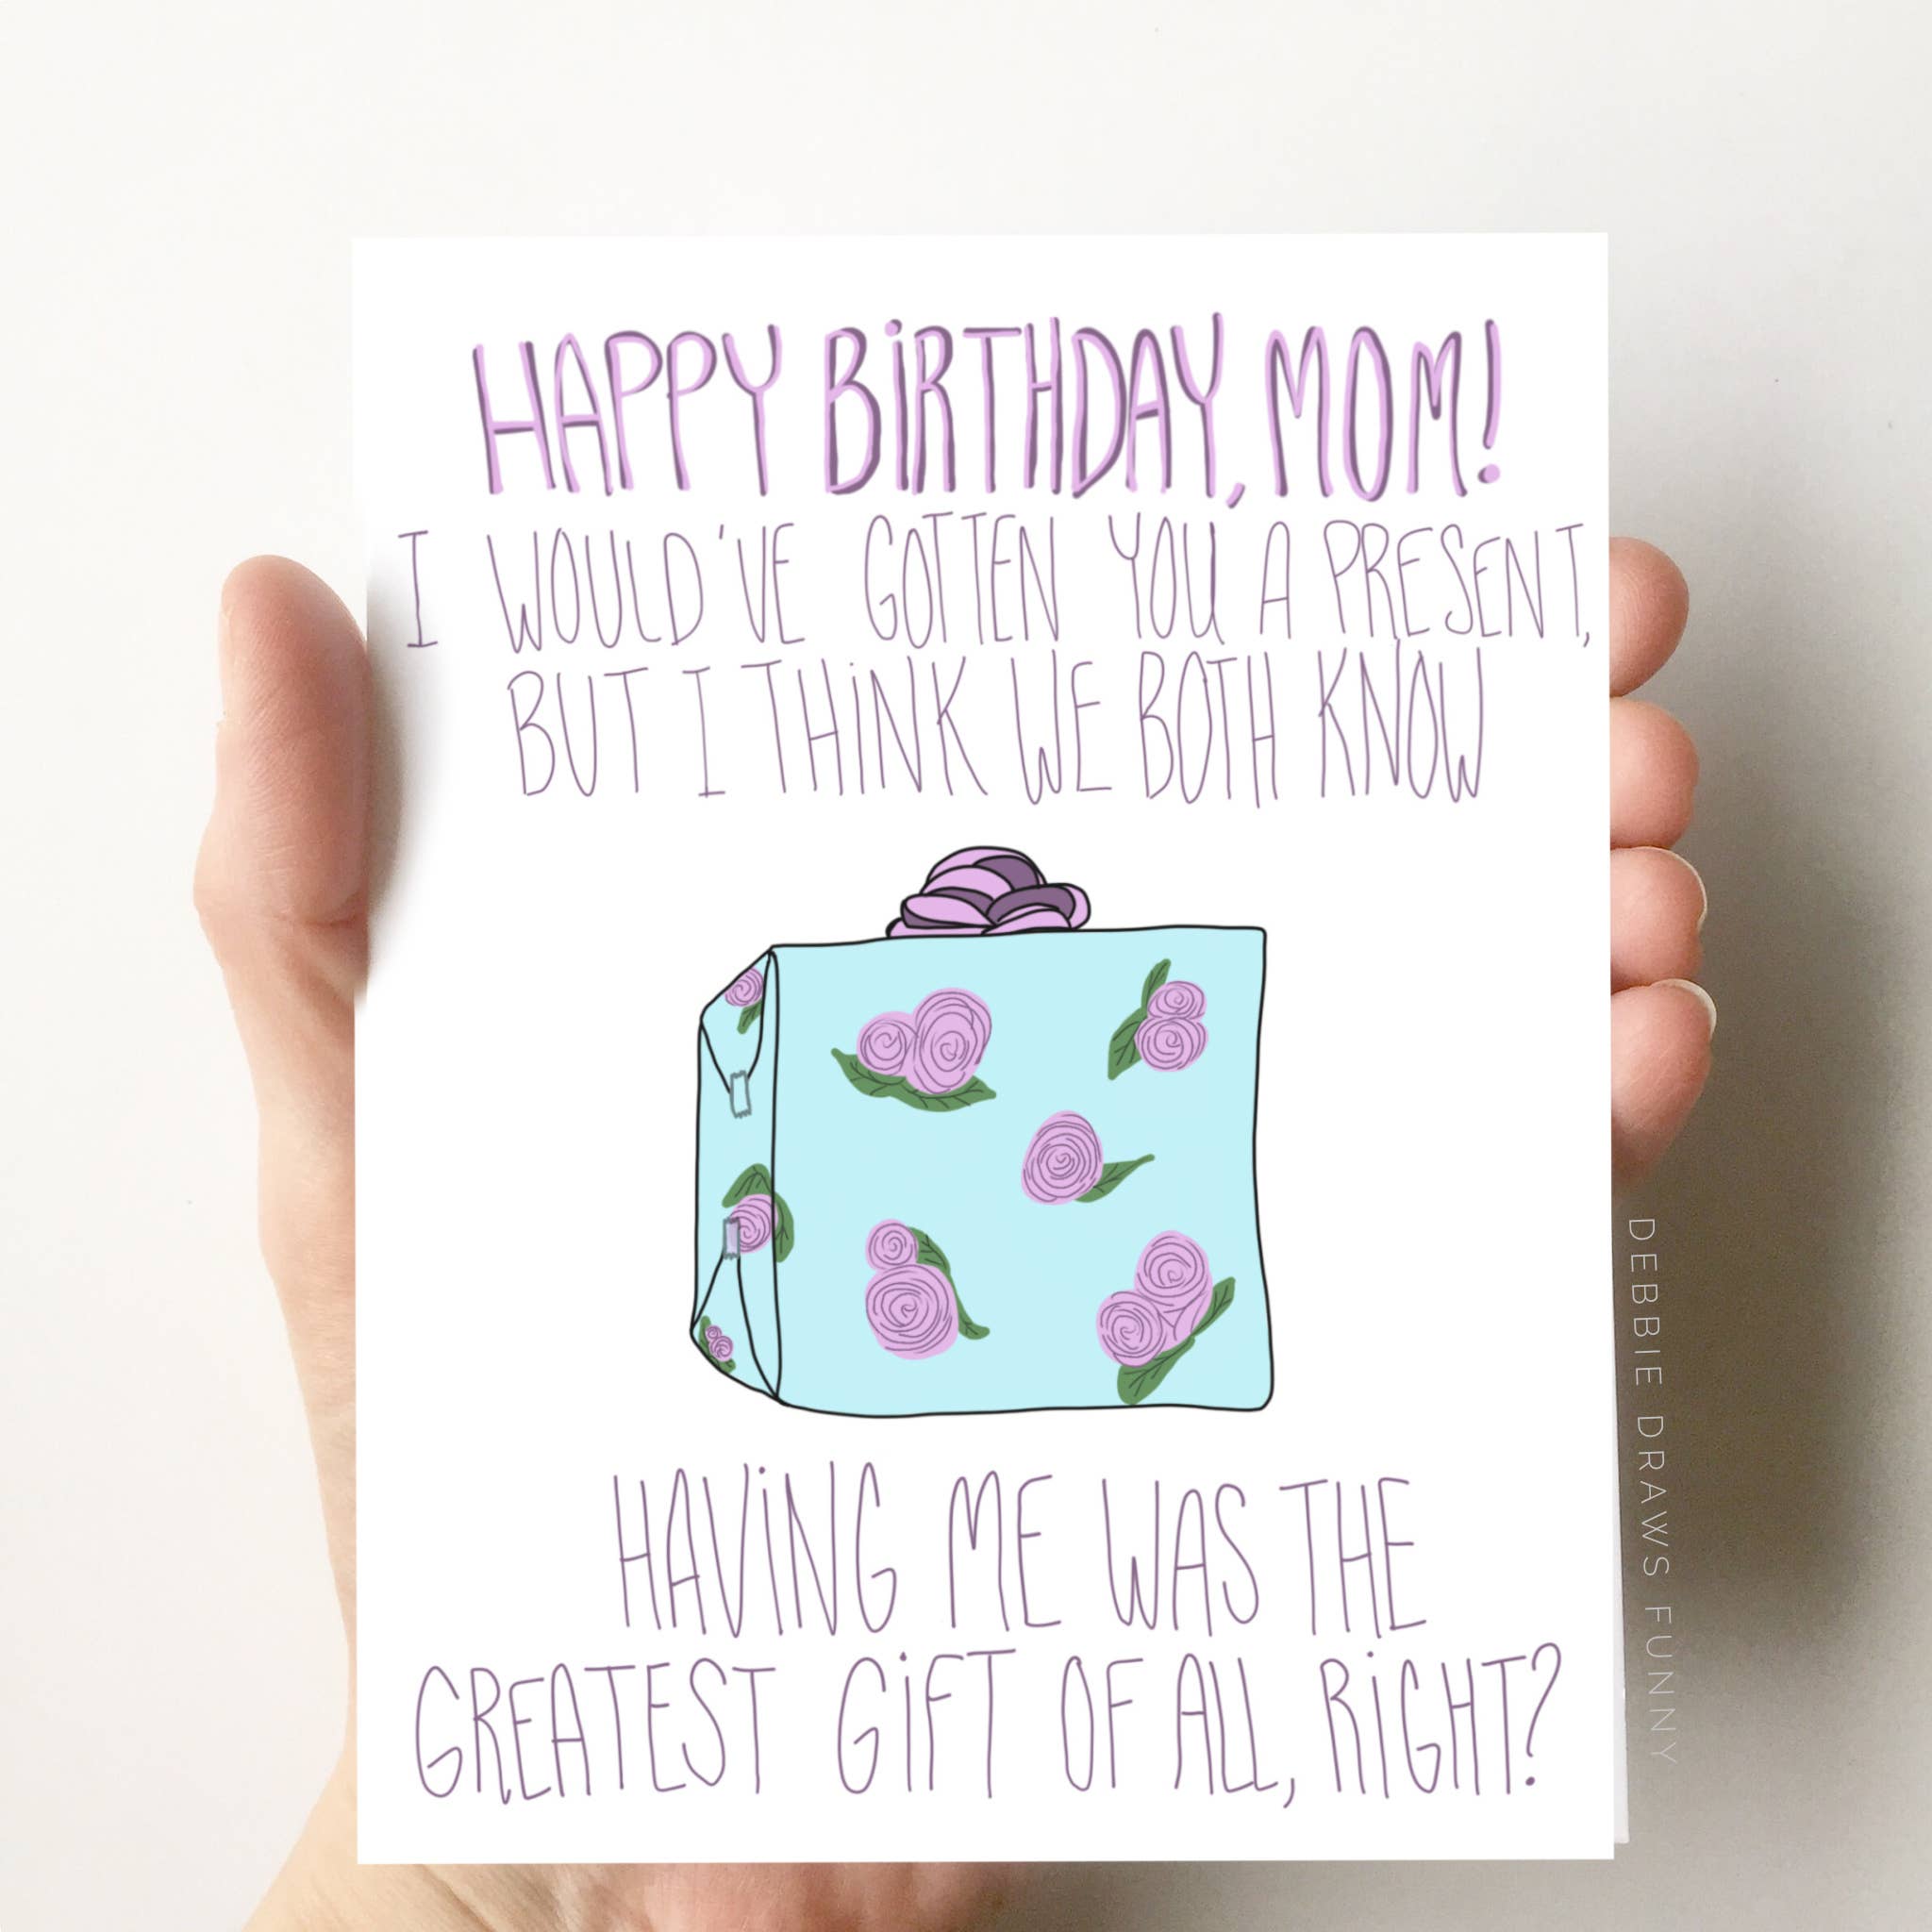 Happy Birthday Mom Funny Birthday Card